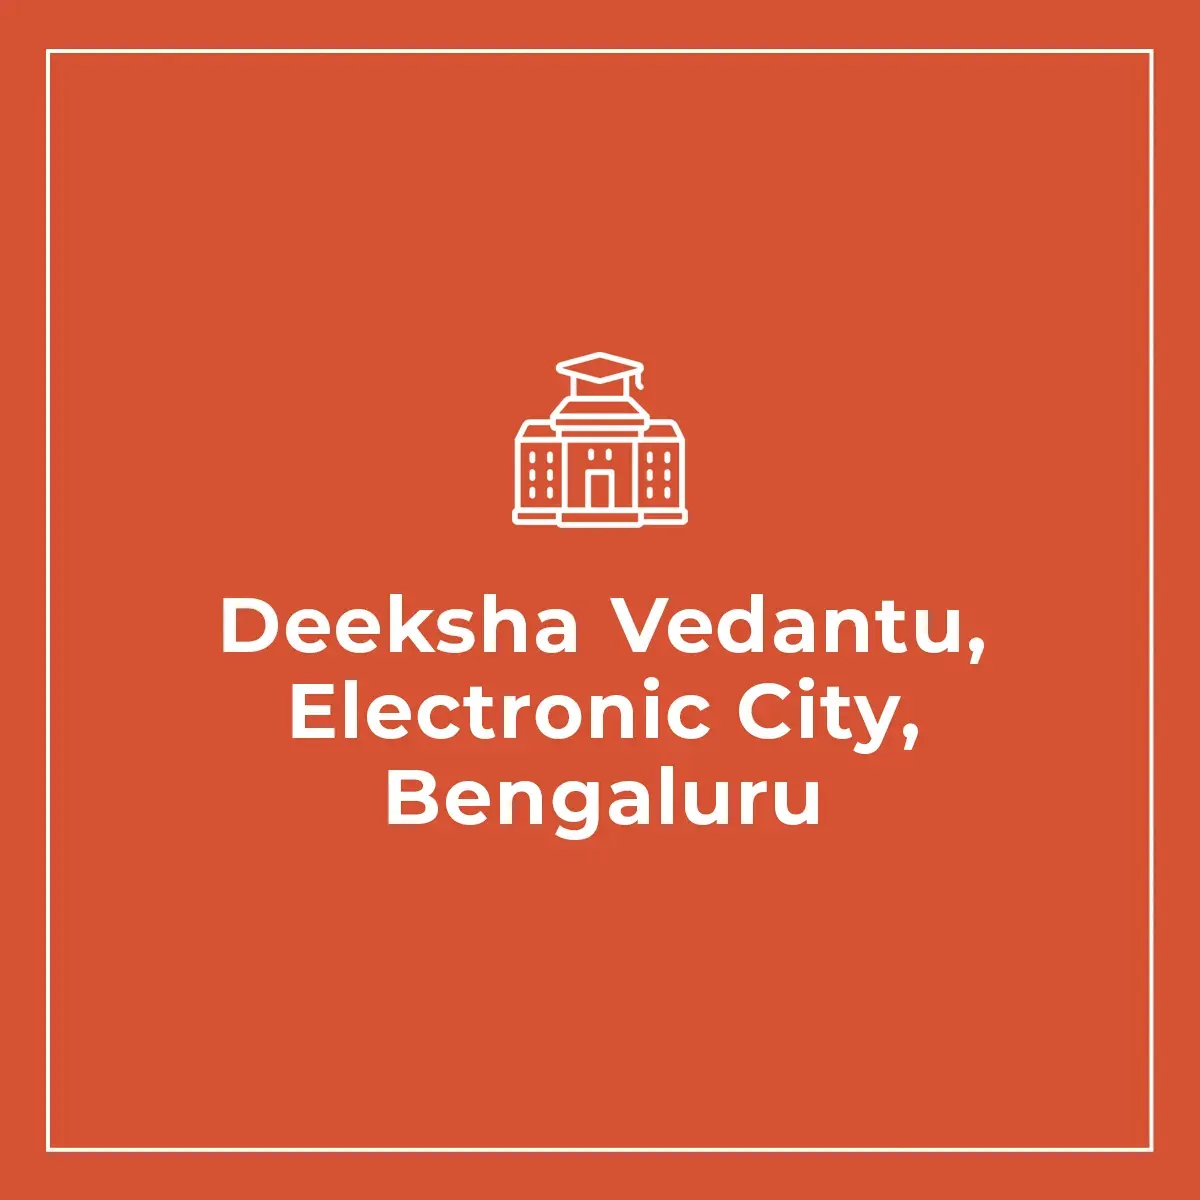 Deeksha Vedantu, Electronic City, Bengaluru